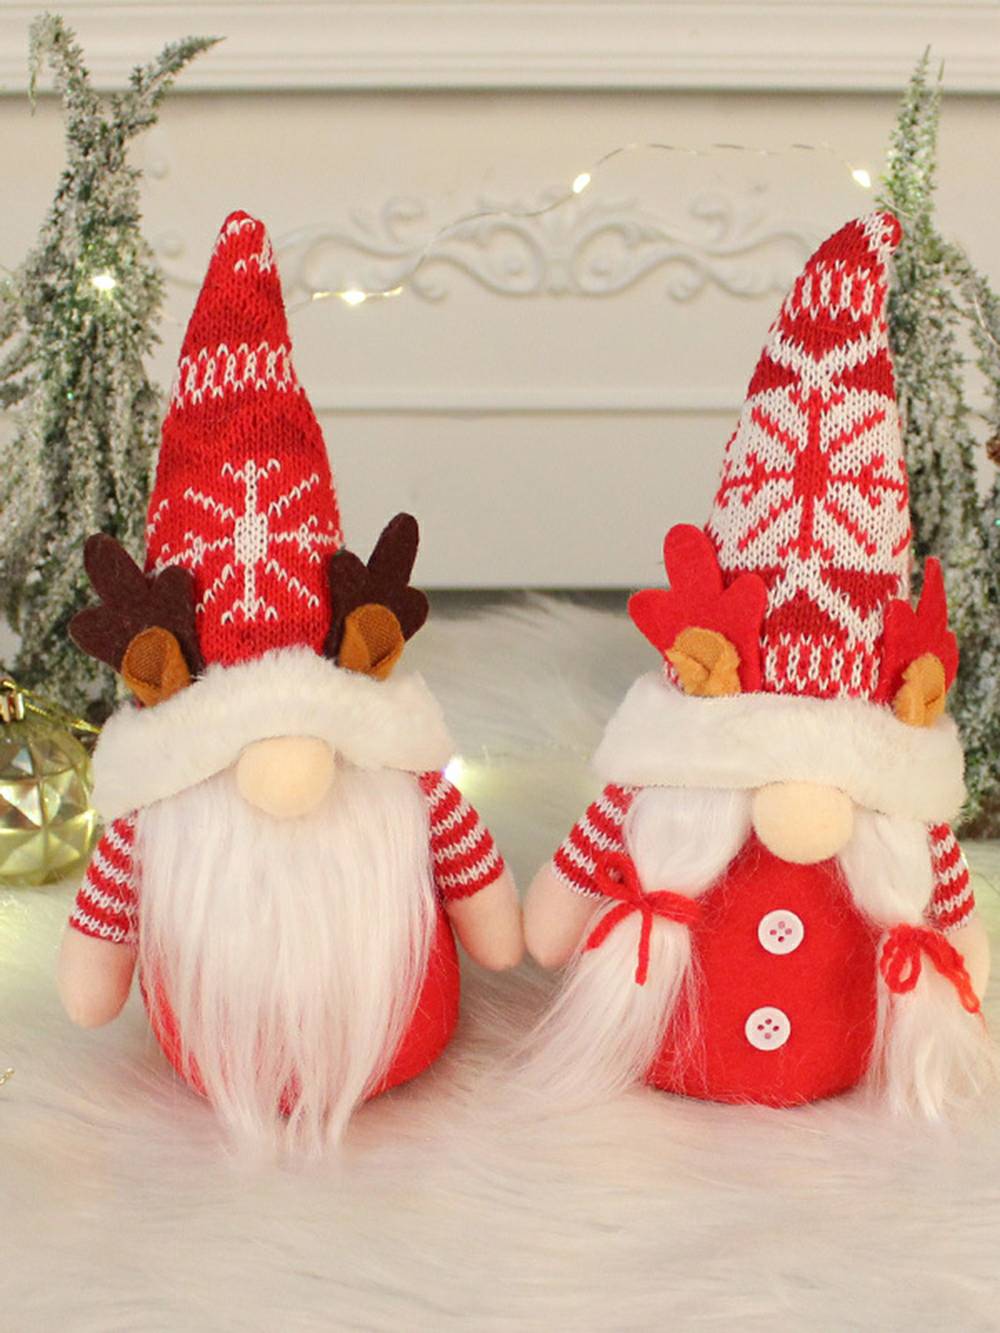 Christmas Plys Elf Decor: Flettet & skægget pardukke med gevirer